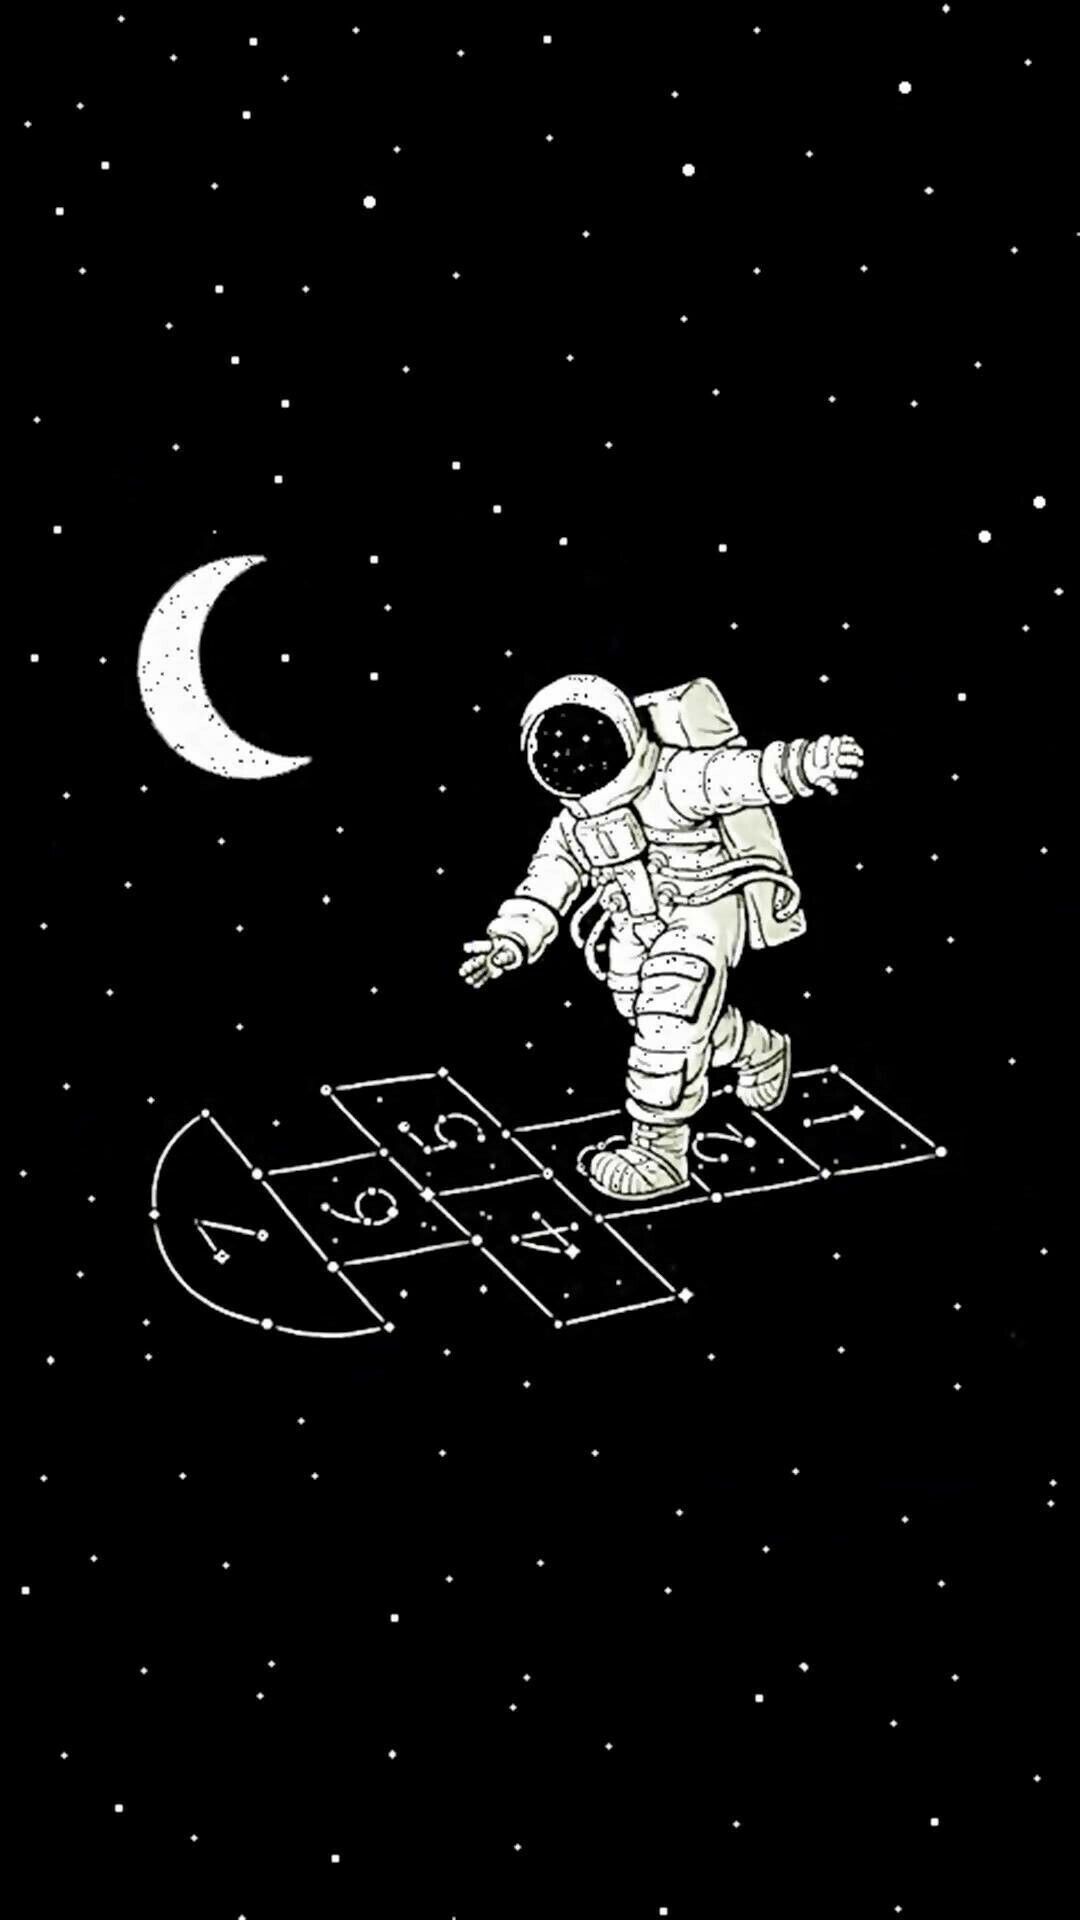 Space hopscotch